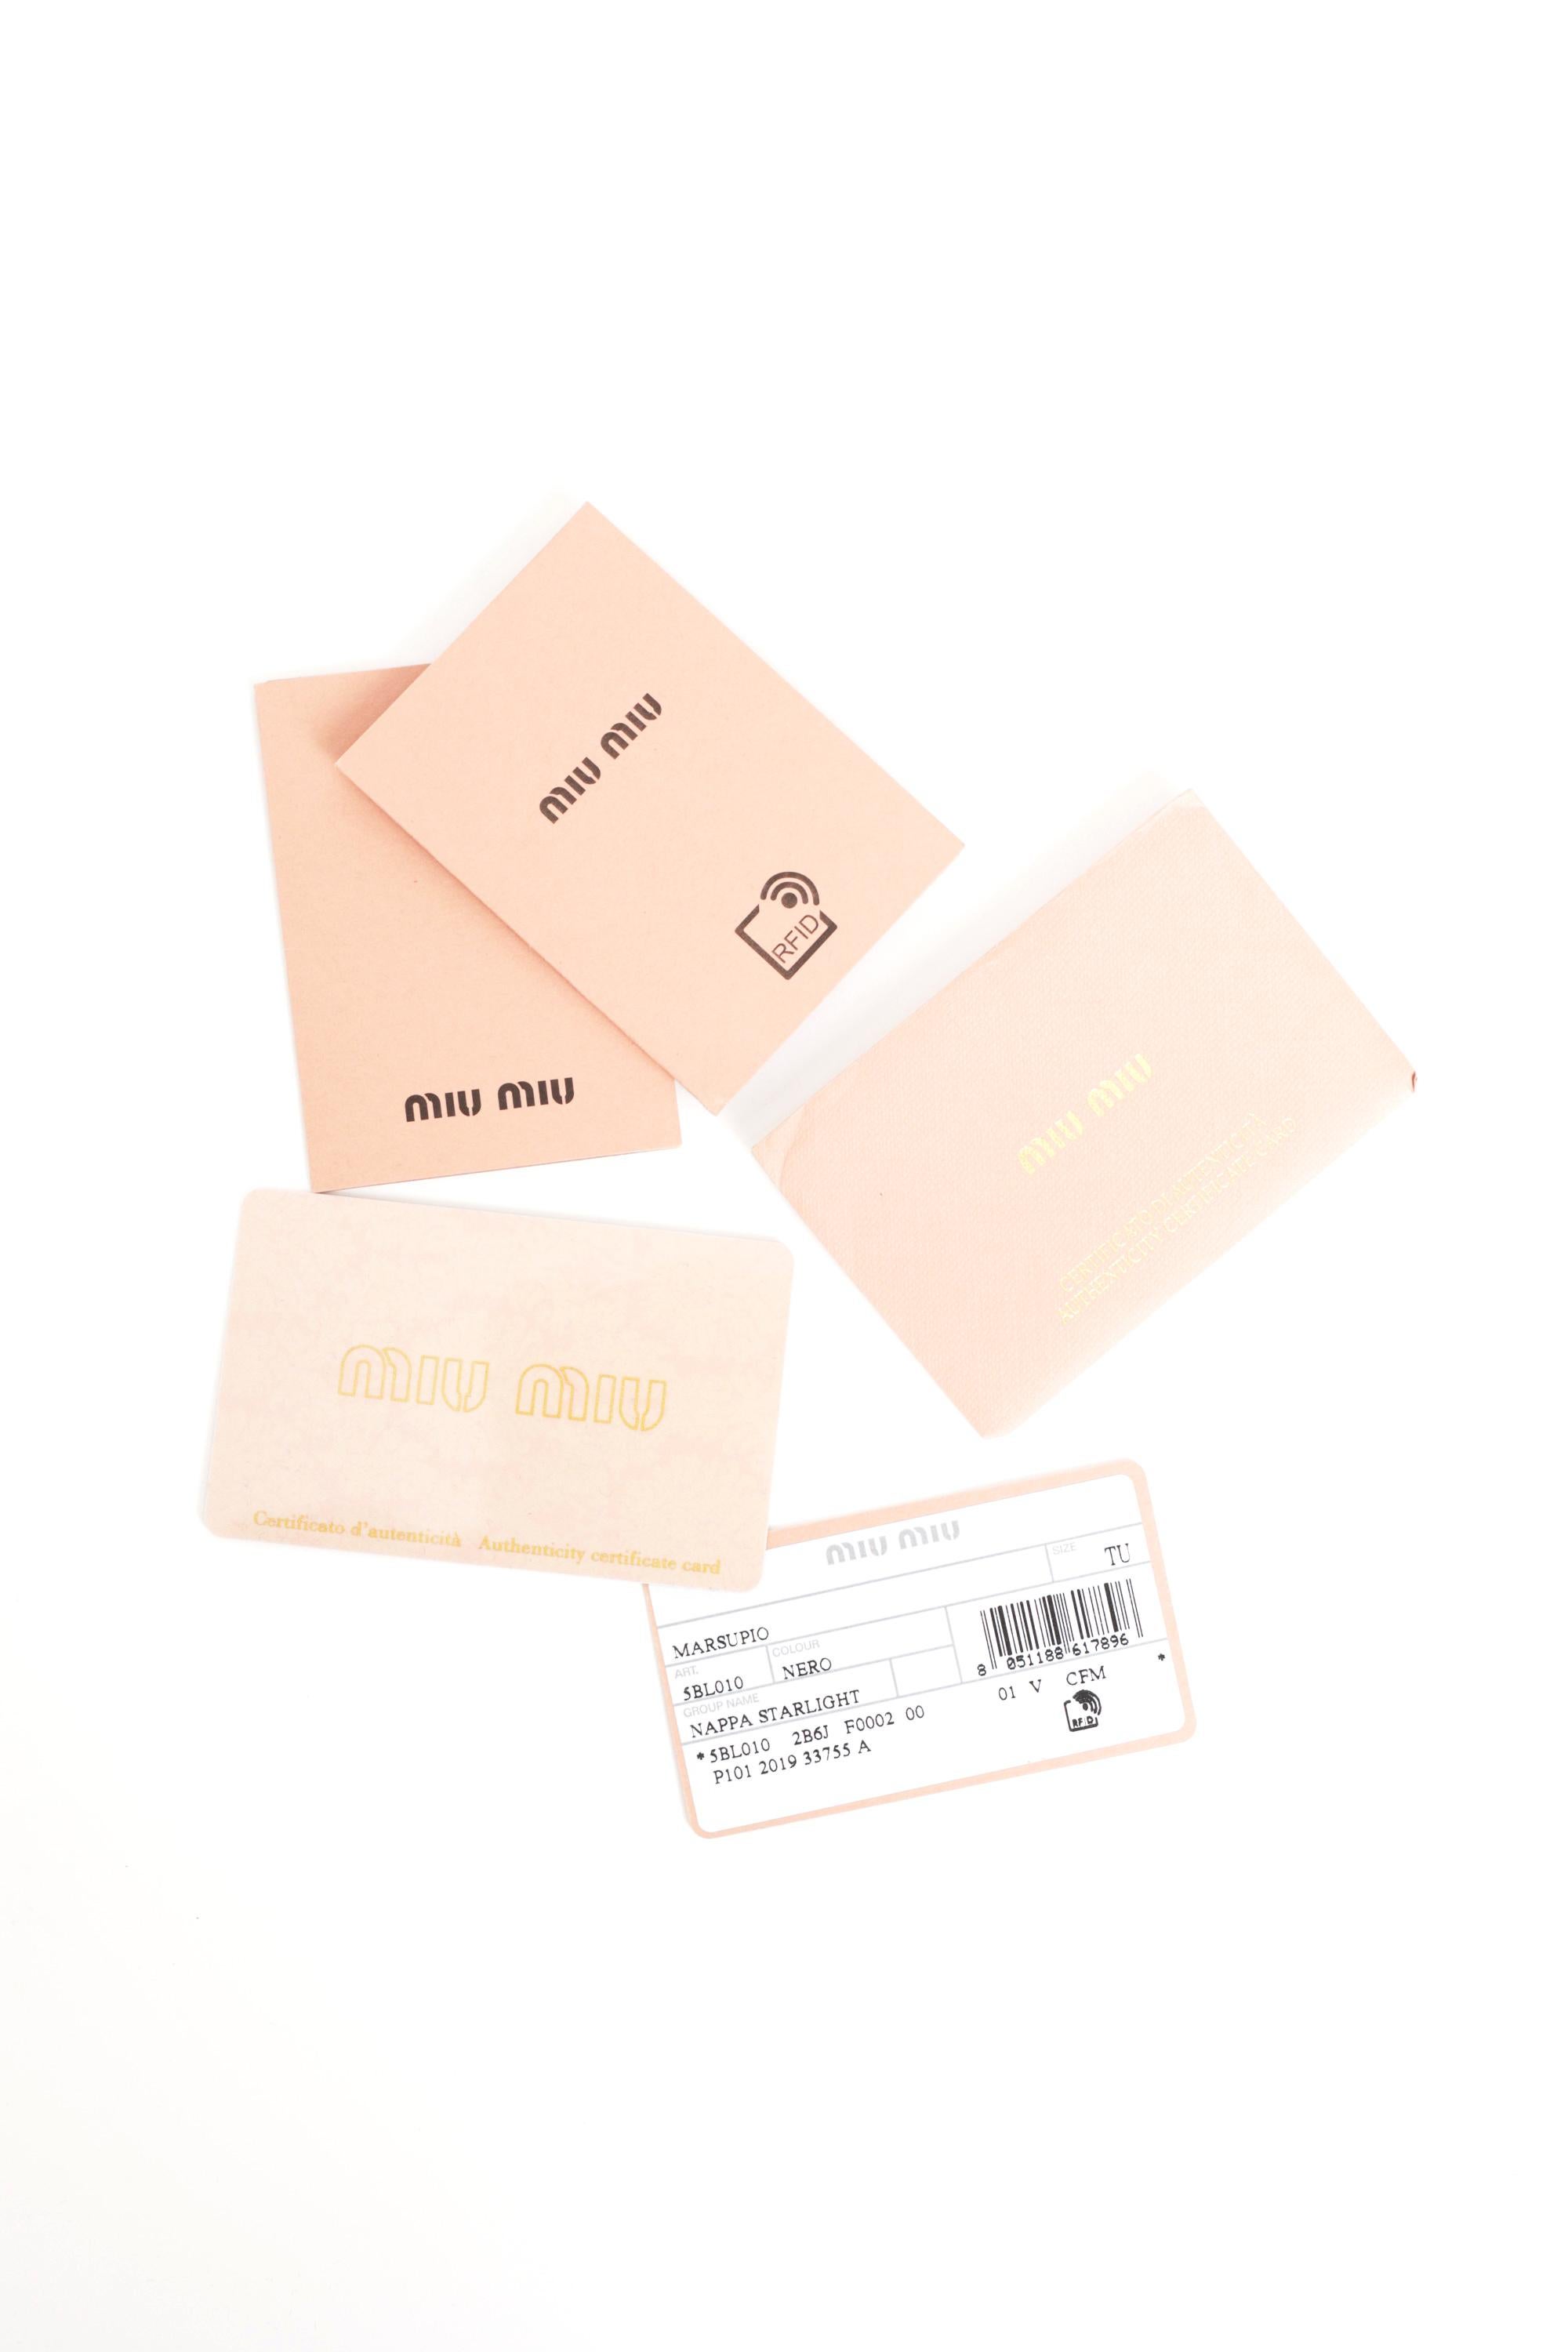 Miu Miu 2019 Nappa Starlight Bag For Sale 2